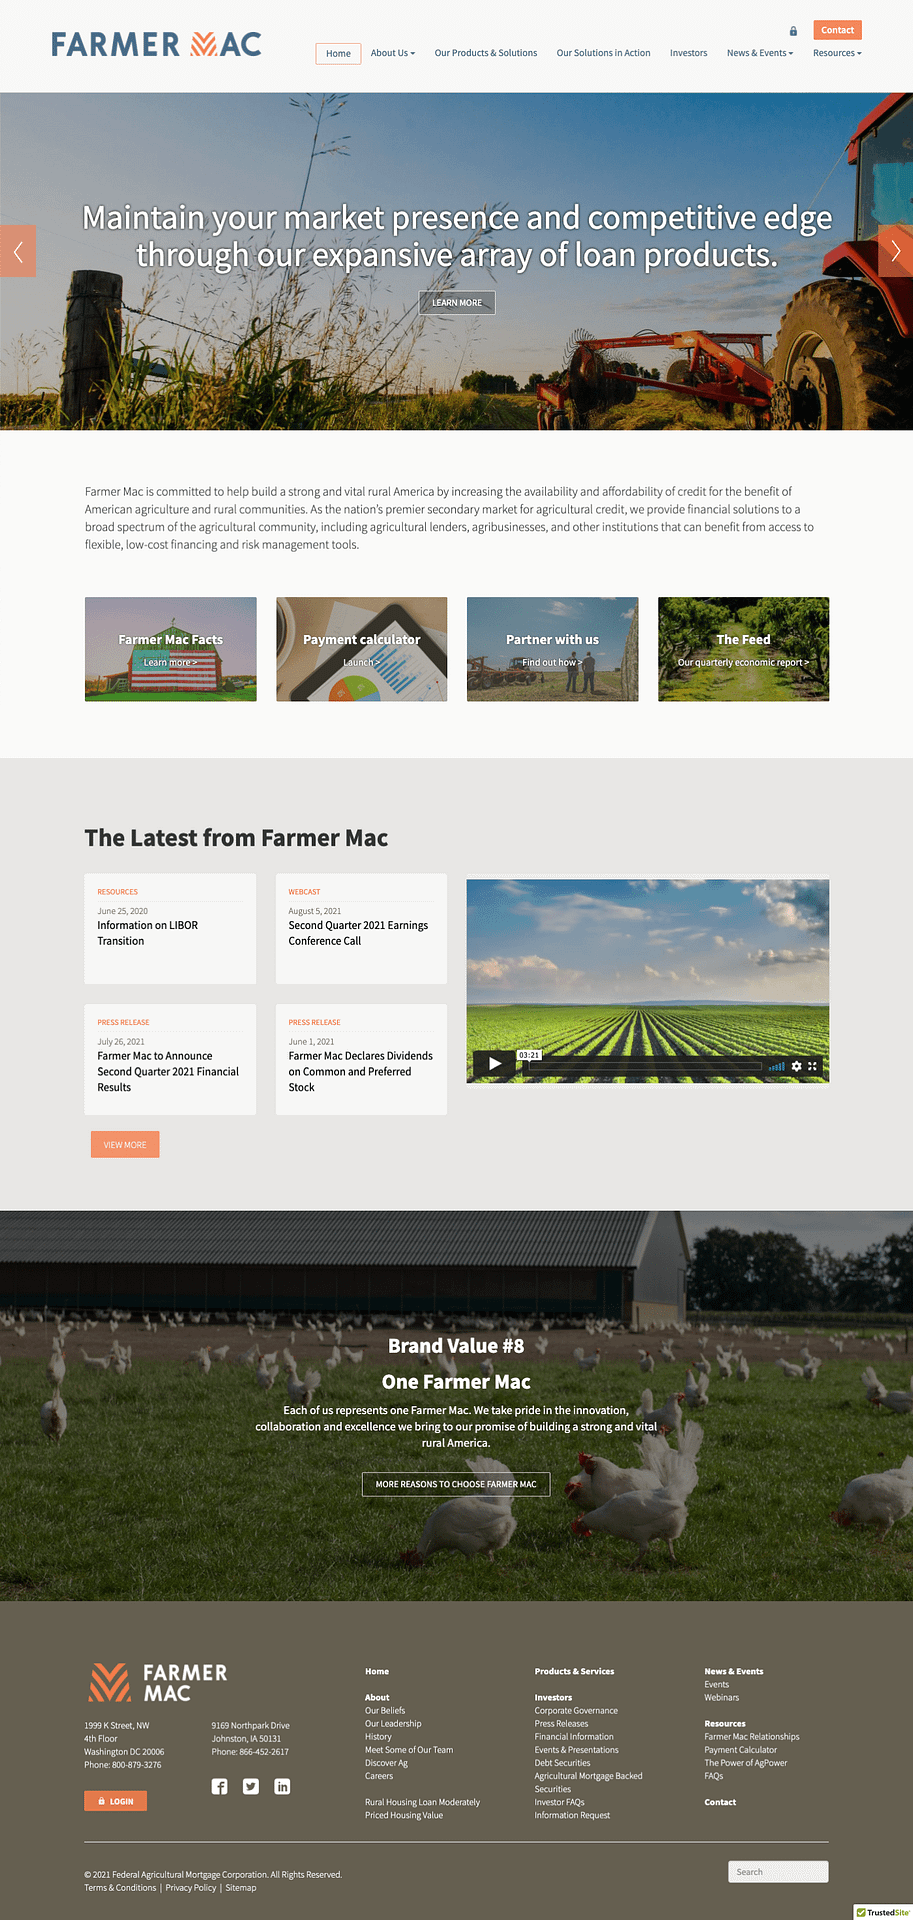 Farmer Mac website design detail